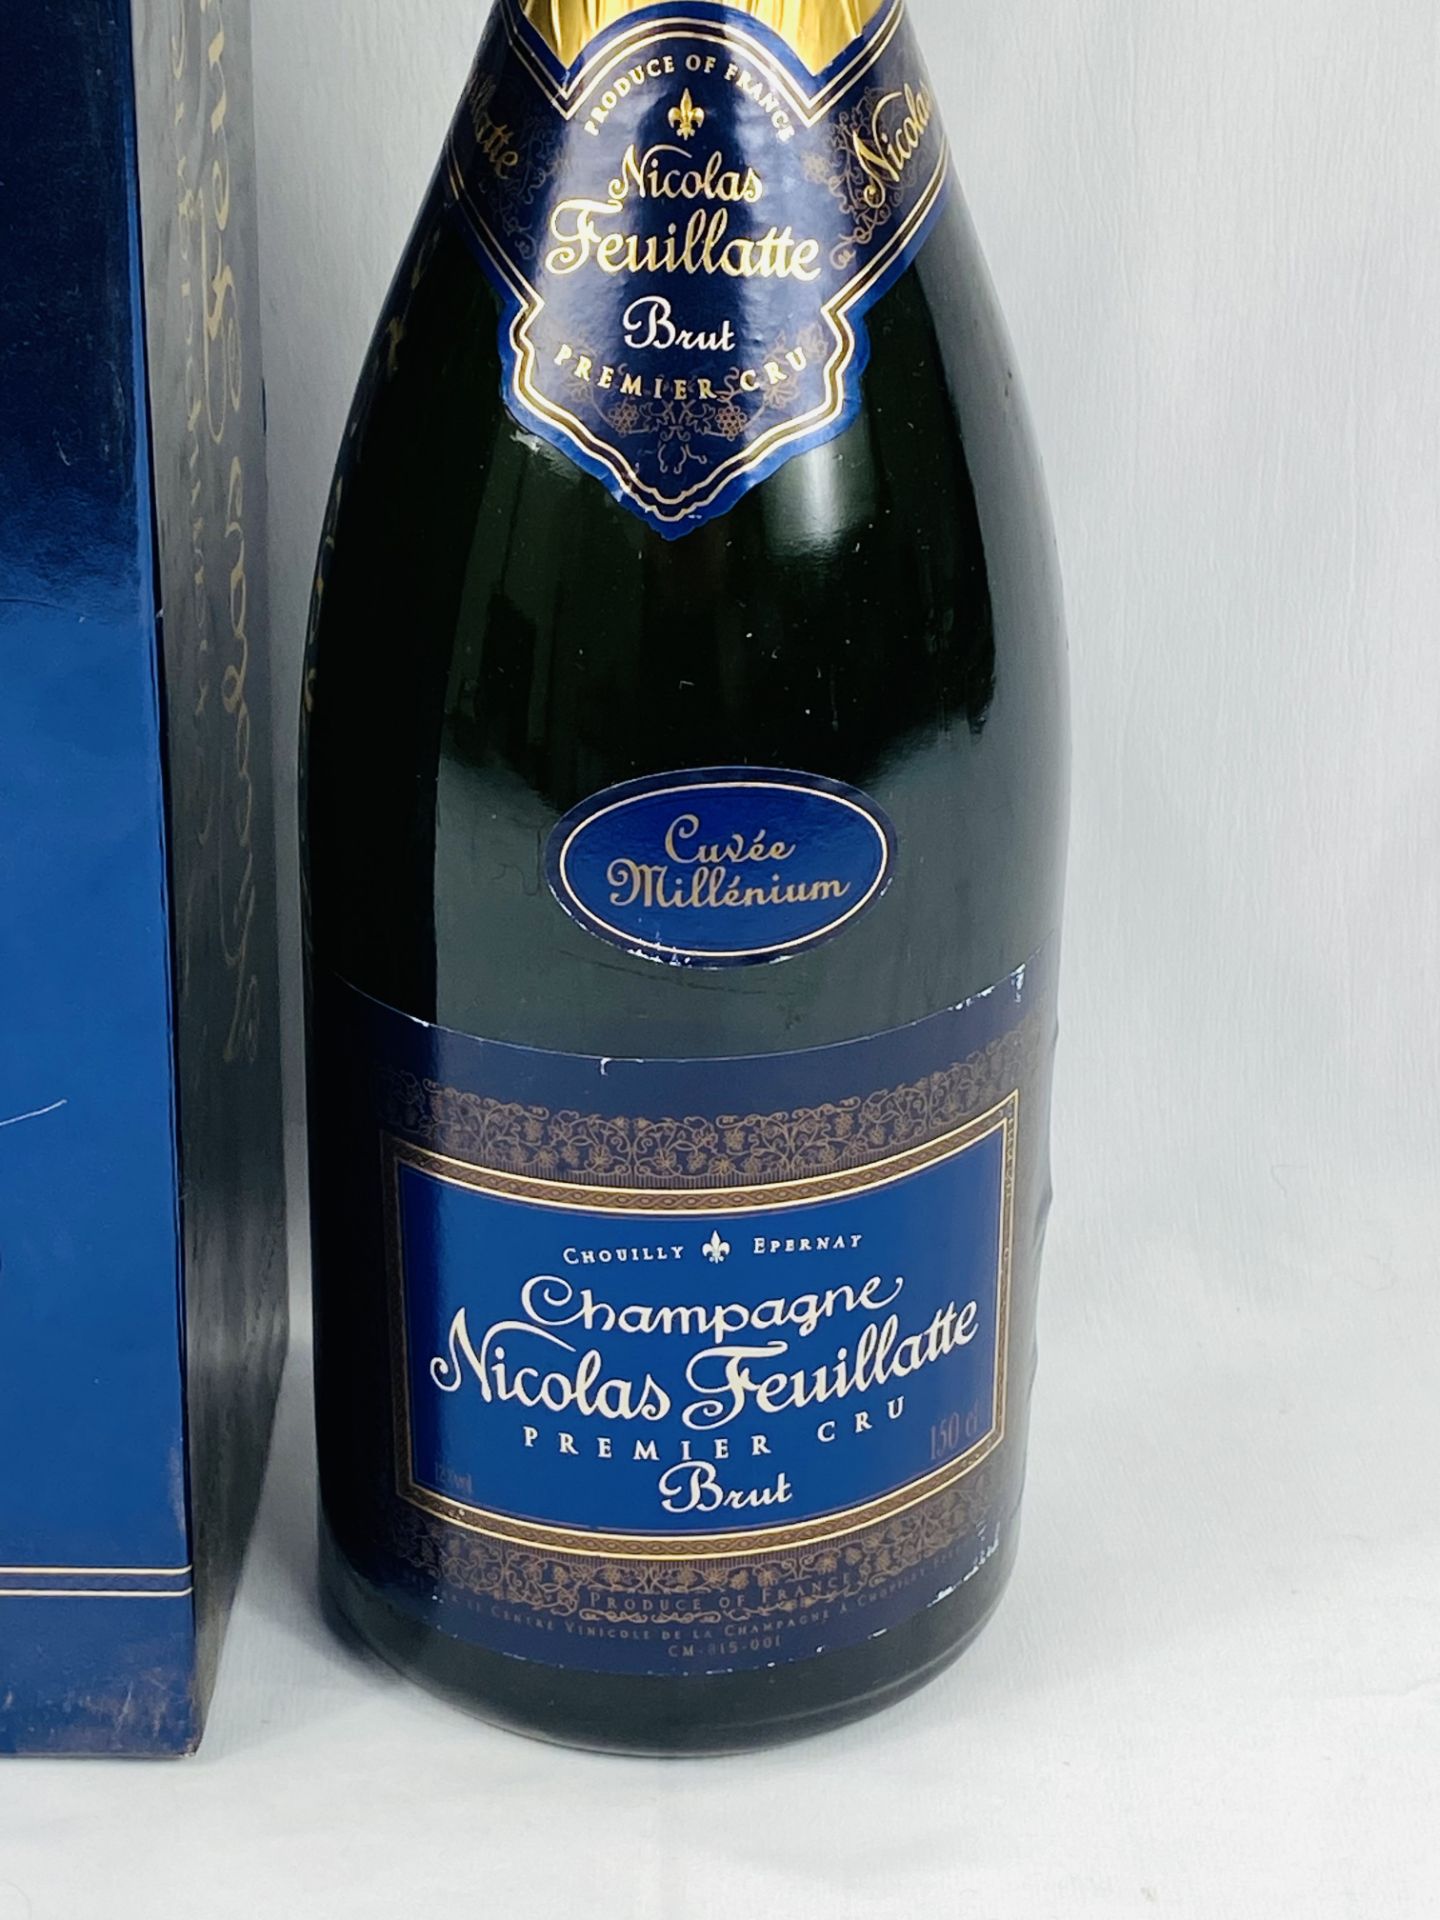 Nicolas Feuillatte Premier cru champagne - Image 2 of 4